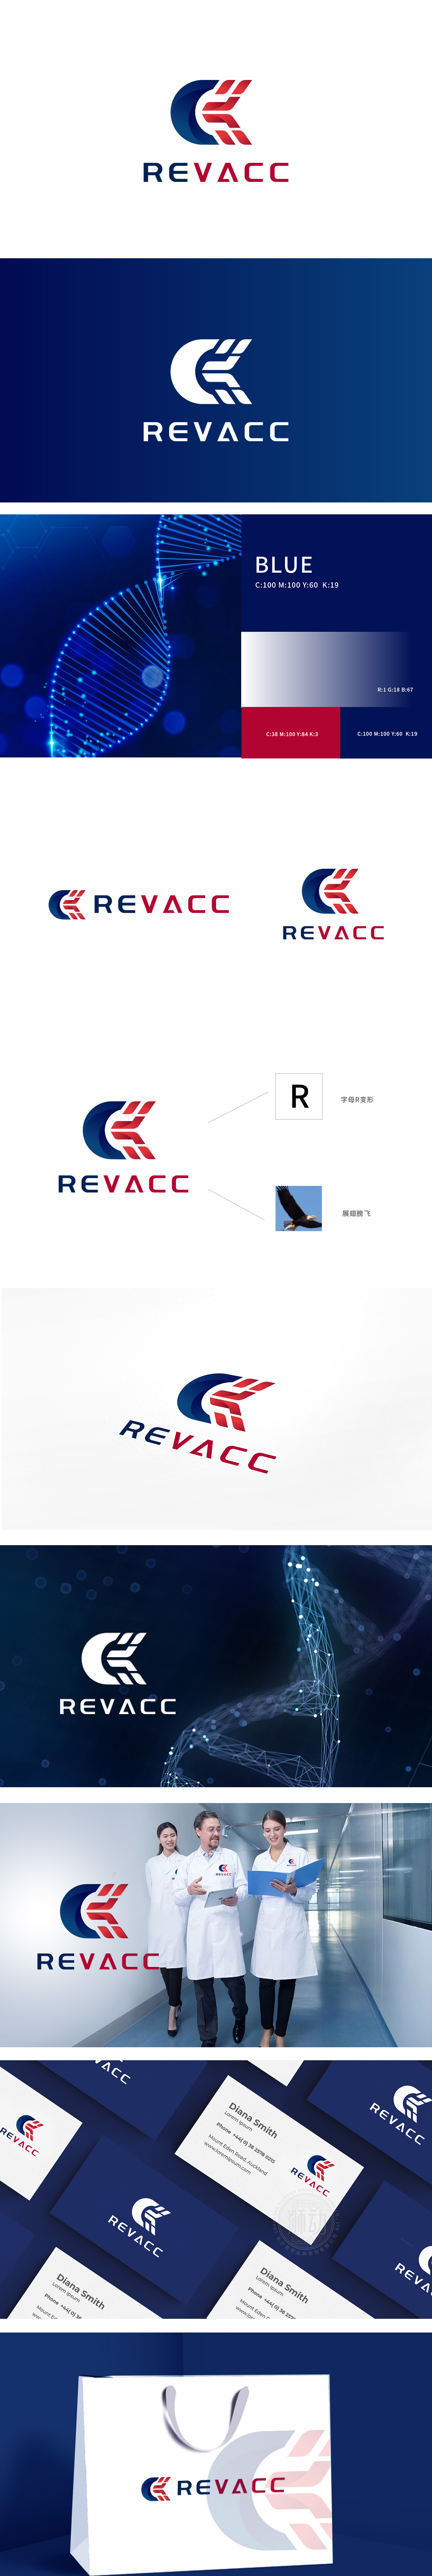 ReVacc医疗器械 LOGO设计